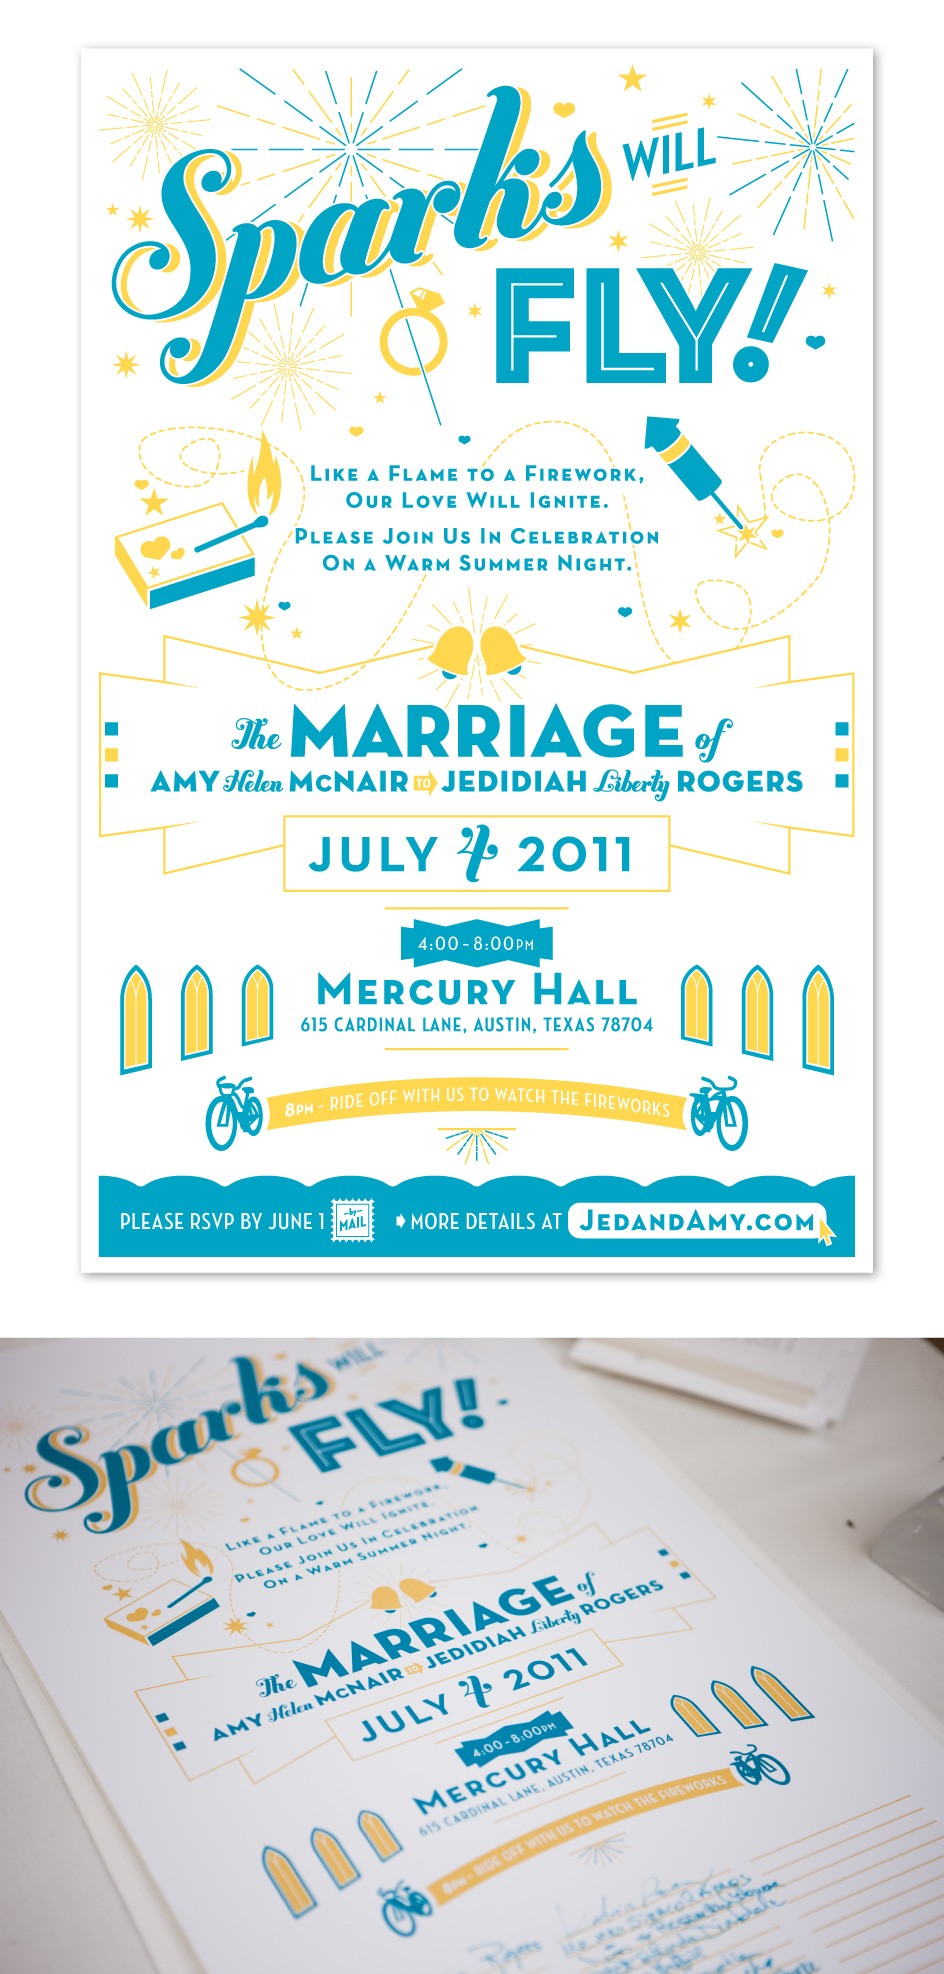 Amy-Jed-Wedding-Mercury-Hall-July-4-Austin-Texas-Logo-Identity-Branding-Invitations-Stationery-Poster-Matchbox-Save-The-Date-RSVP-Poster